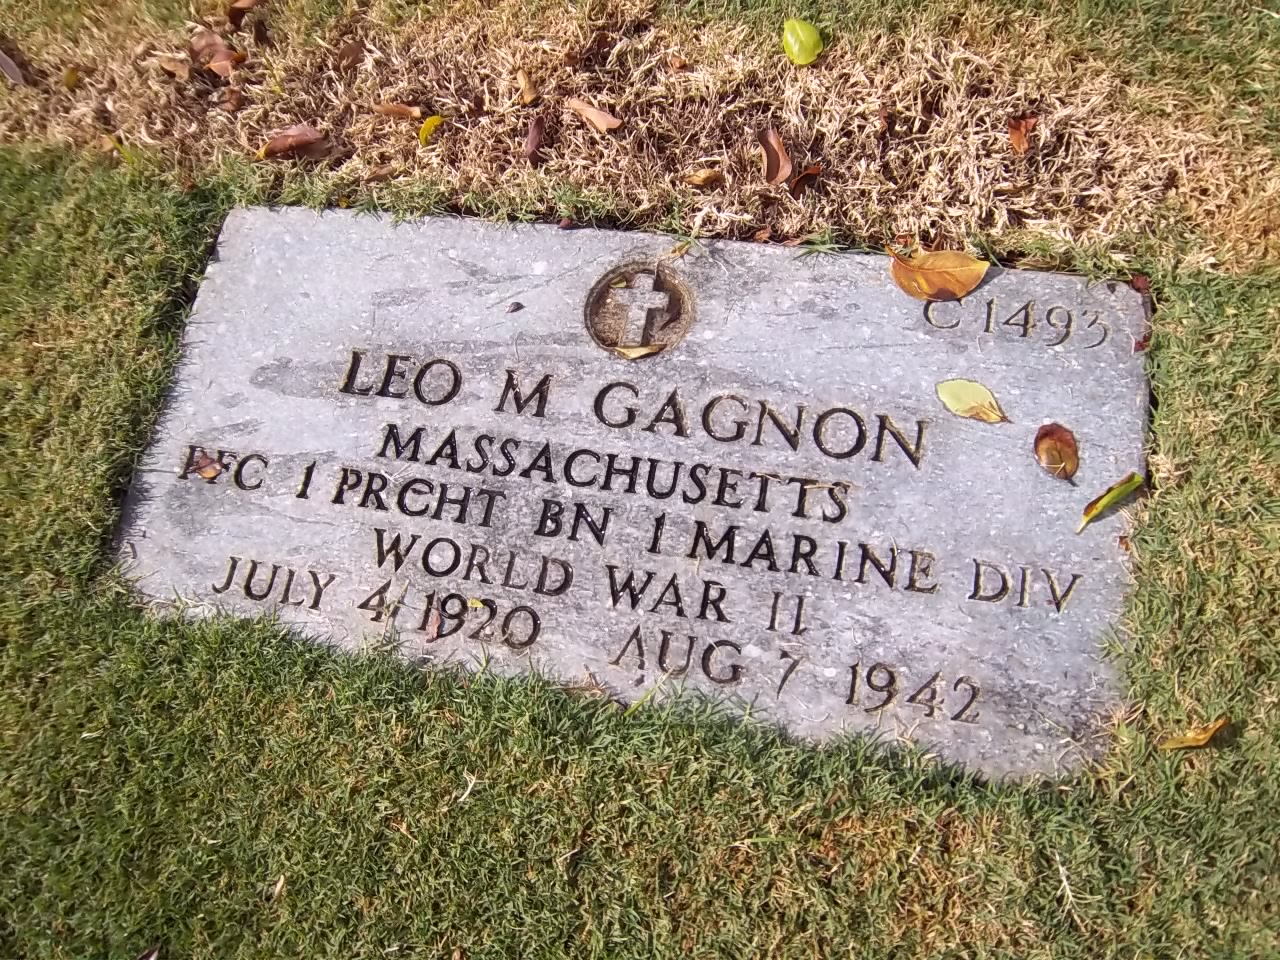 L. Gagnon (Grave)